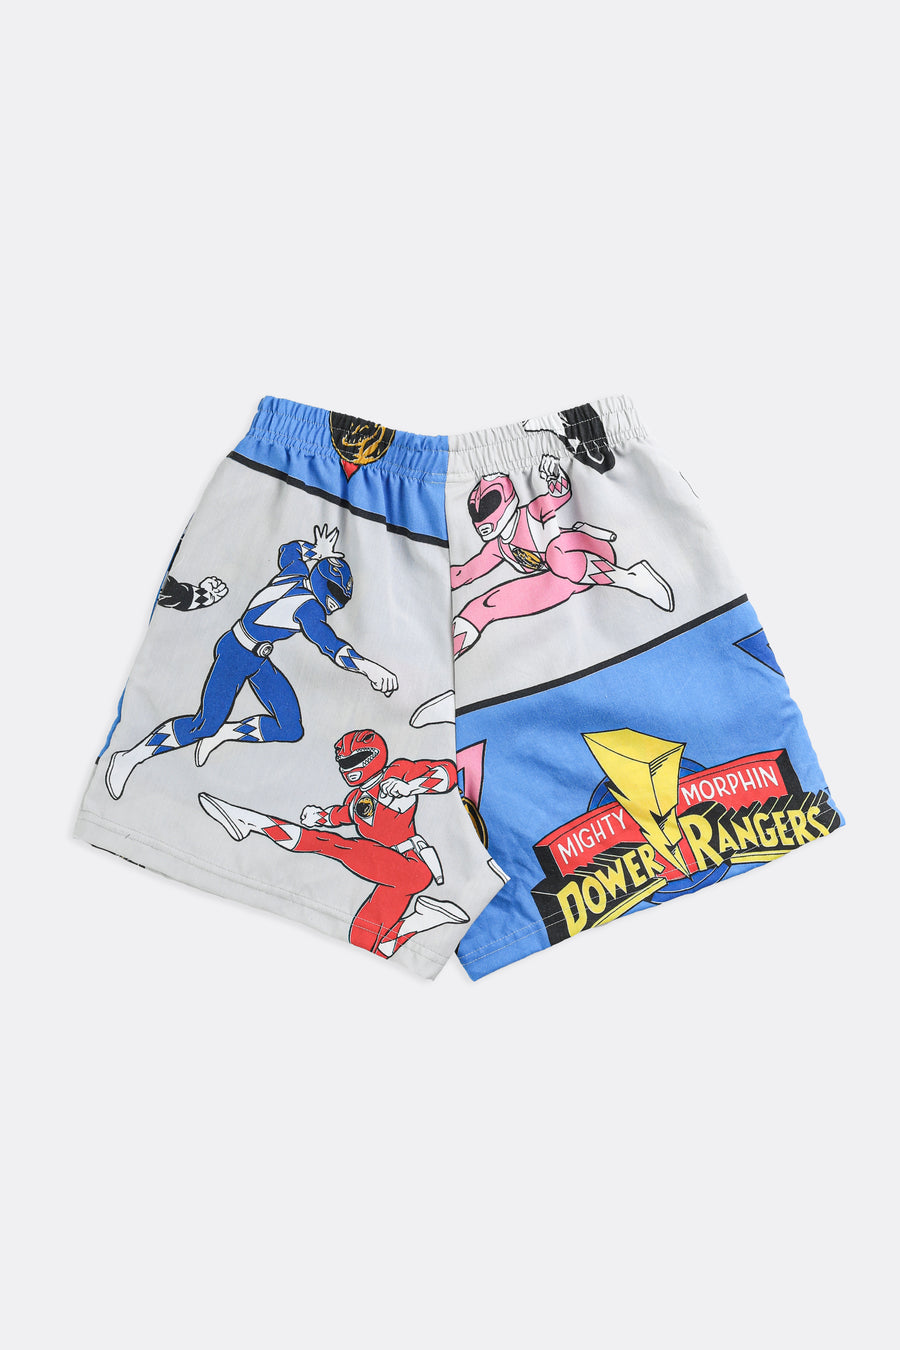 Unisex Rework Power Rangers Boxer Shorts - XS